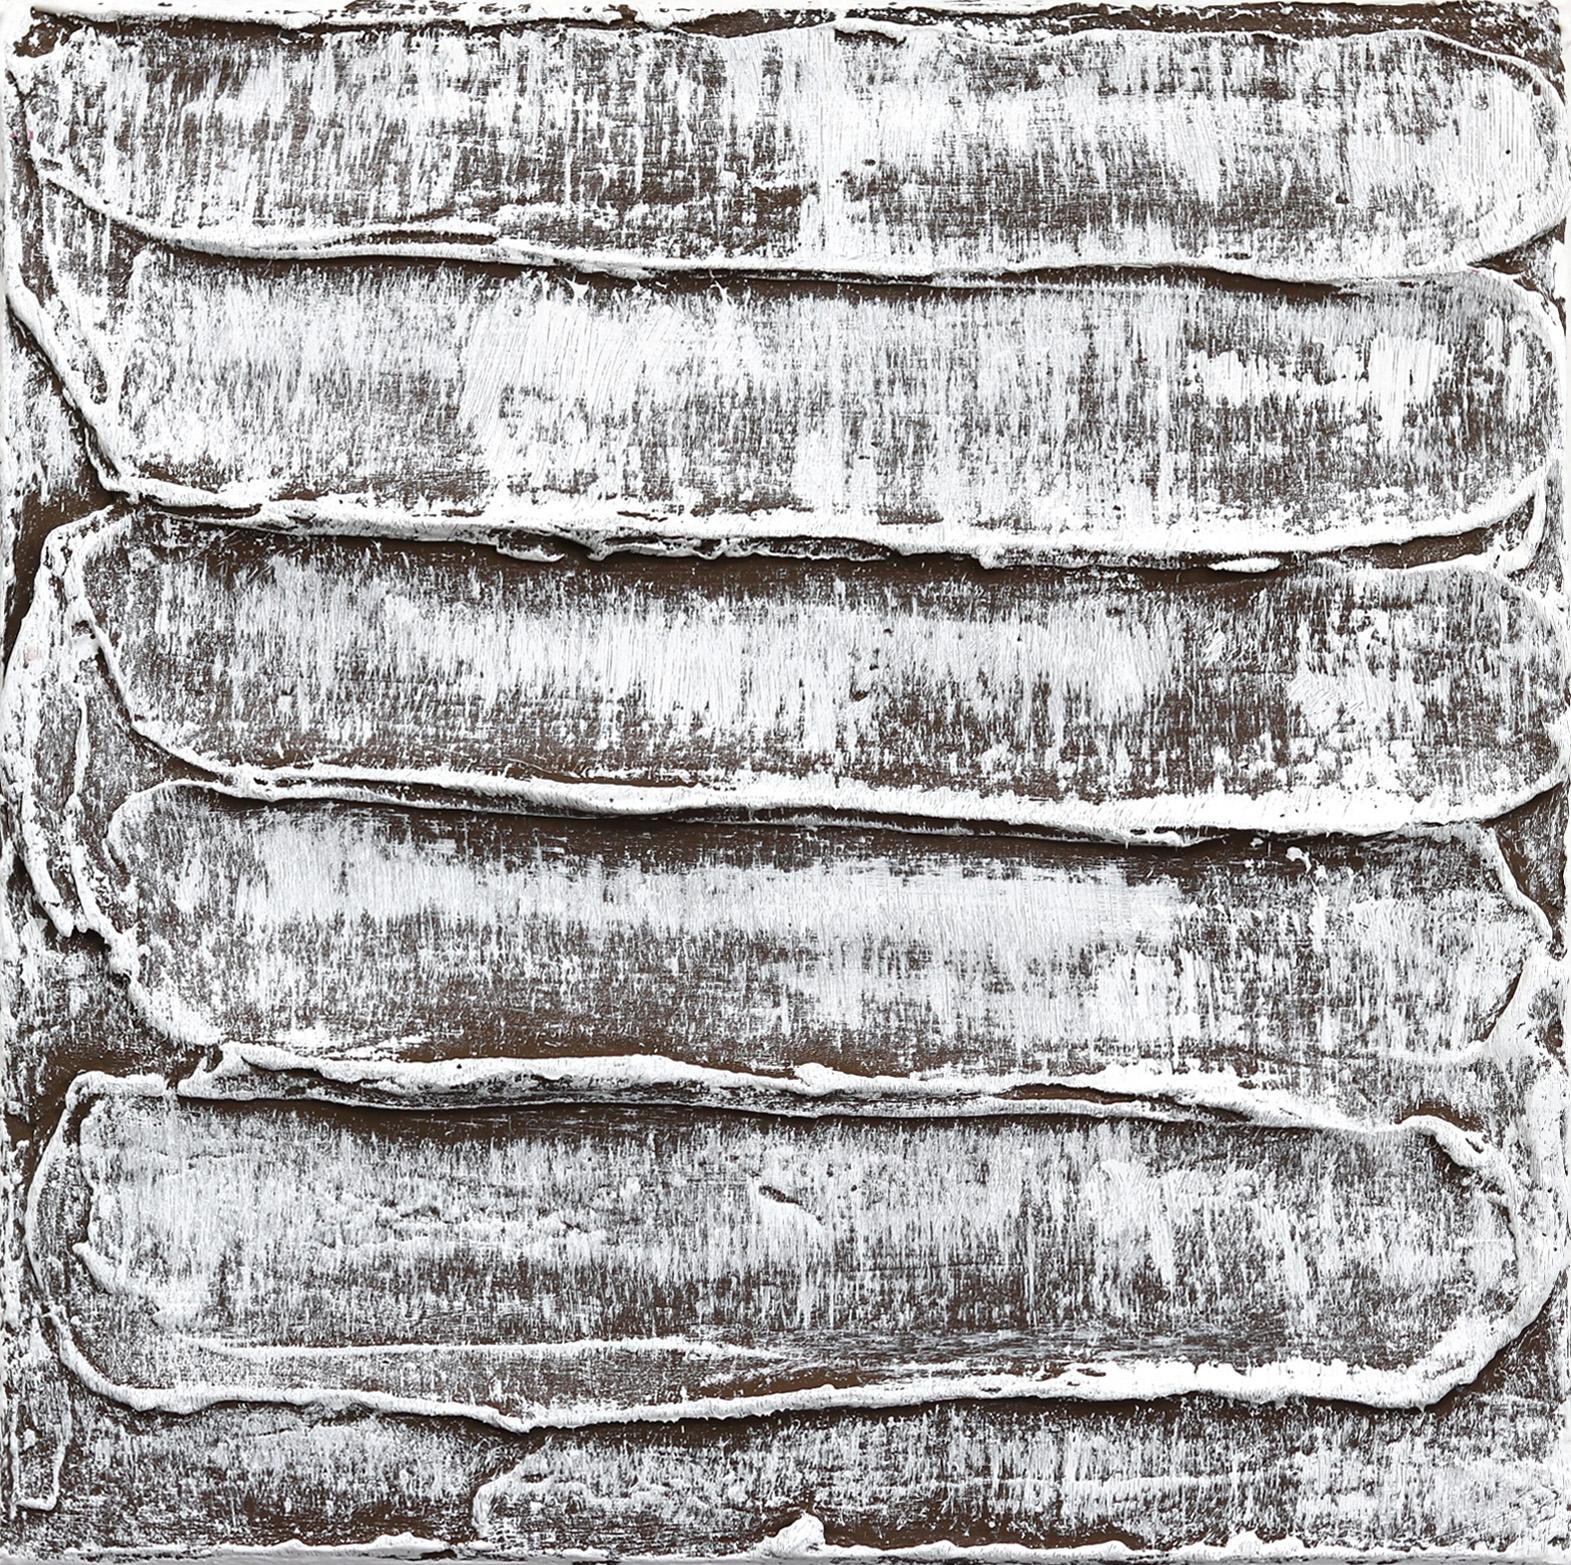 Deep Textures 007 - Textural Abstract Minimalist Impasto Thick Paint on Canvas